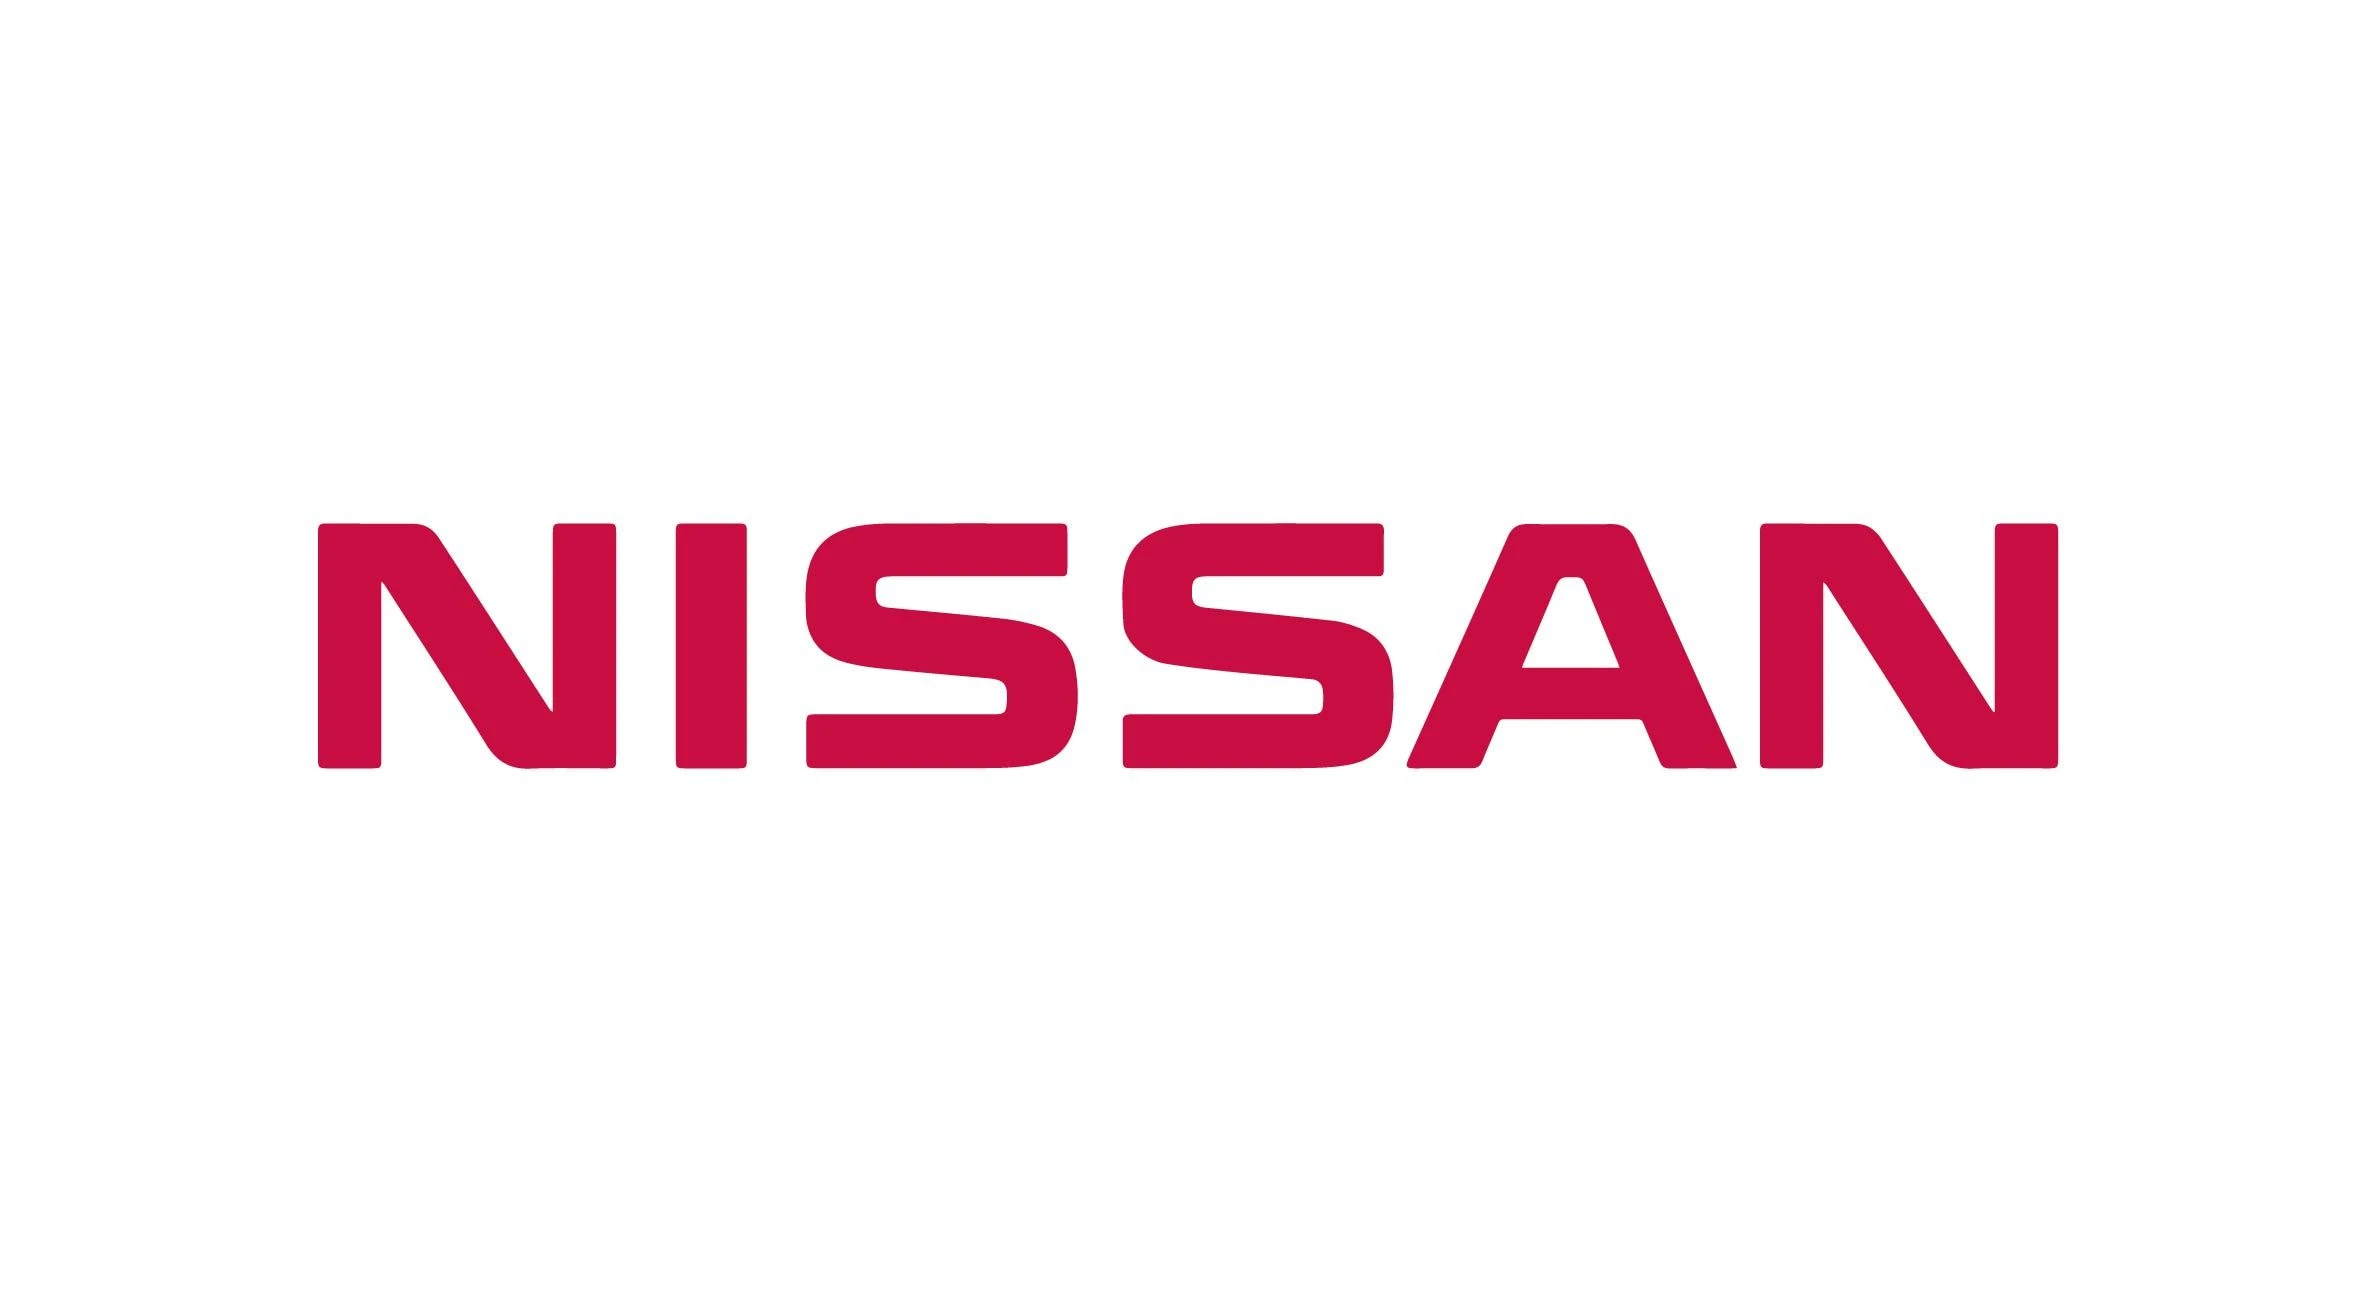 Nissan car brand logo